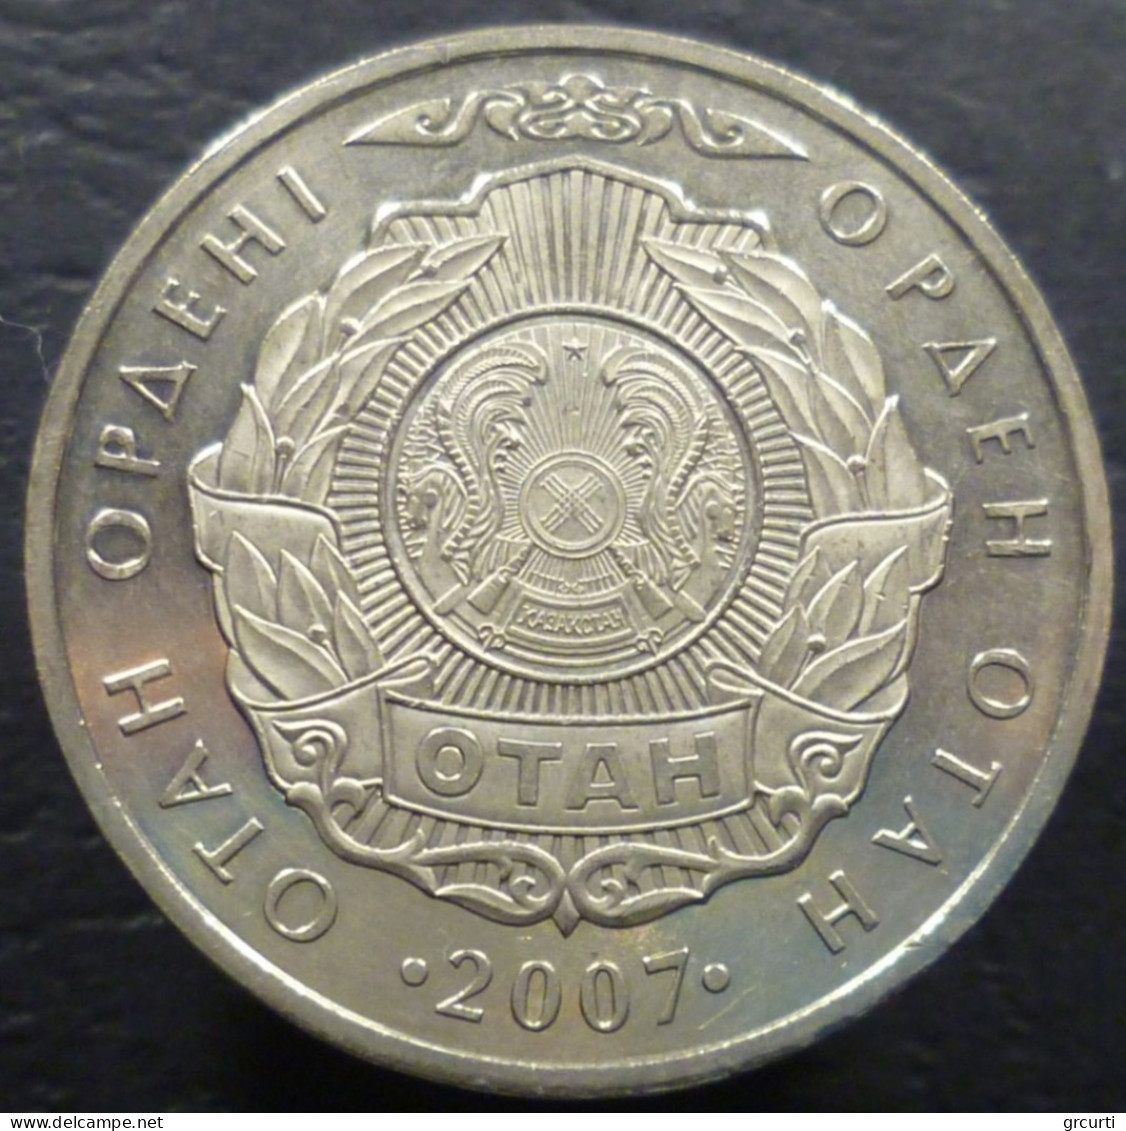 Kazakistan - 50 Tenge 2007 - Serie D'onorificenze - Ordine Della Patria (Отан ордені) - KM# 165 - Kazakhstan